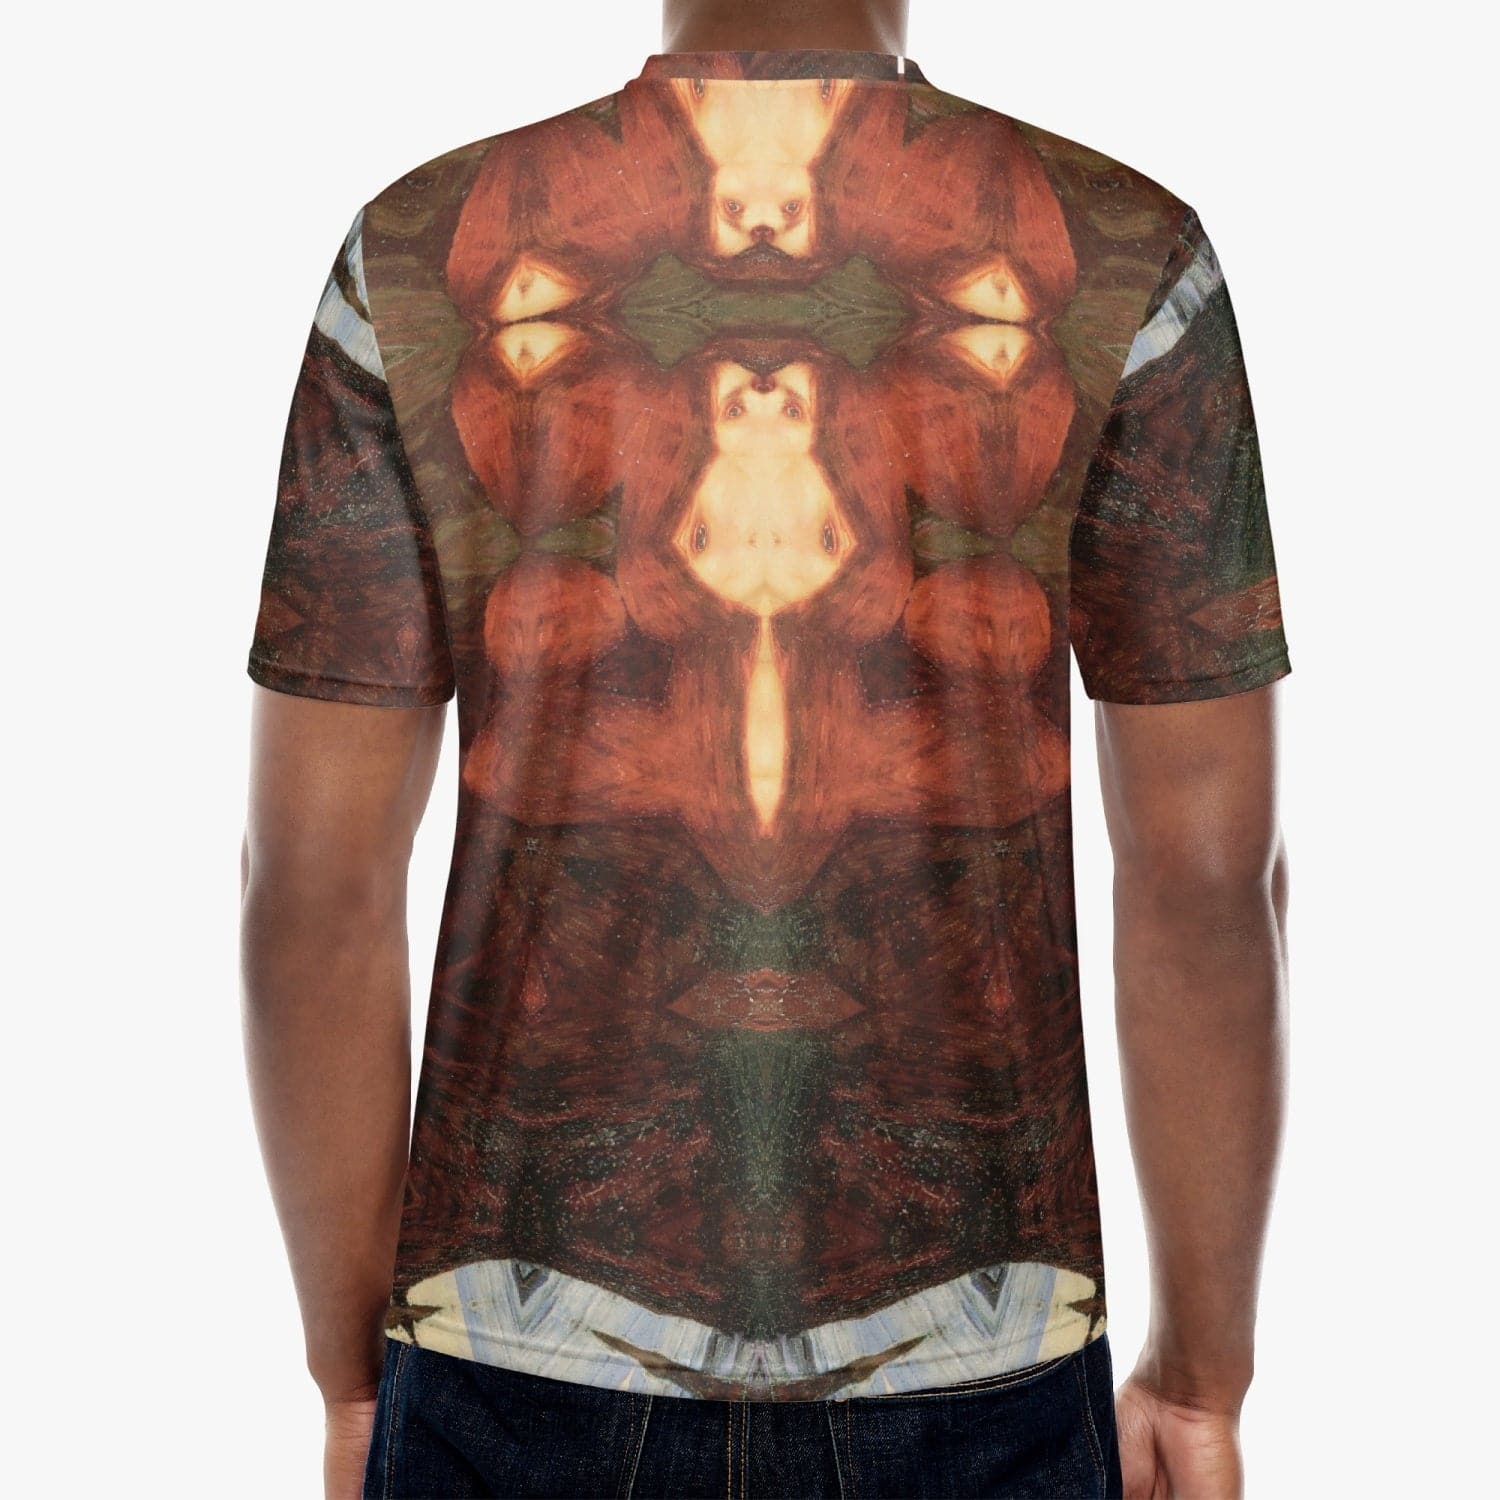 Sensus Studio Design - The Fire Within  Handmade T-shirt for Men